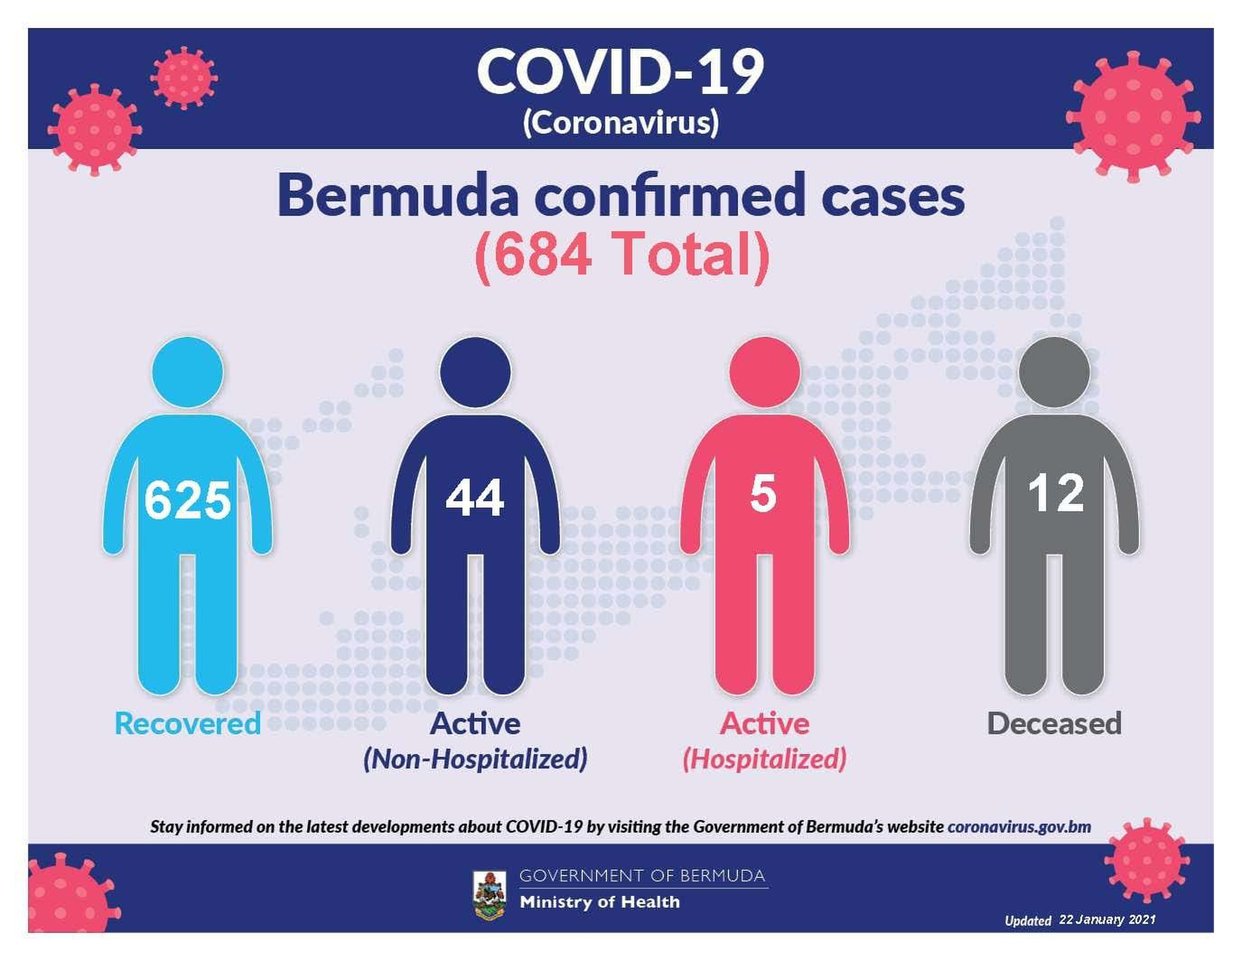 No new COVID-19 cases reported in Bermuda, 22 January 2021